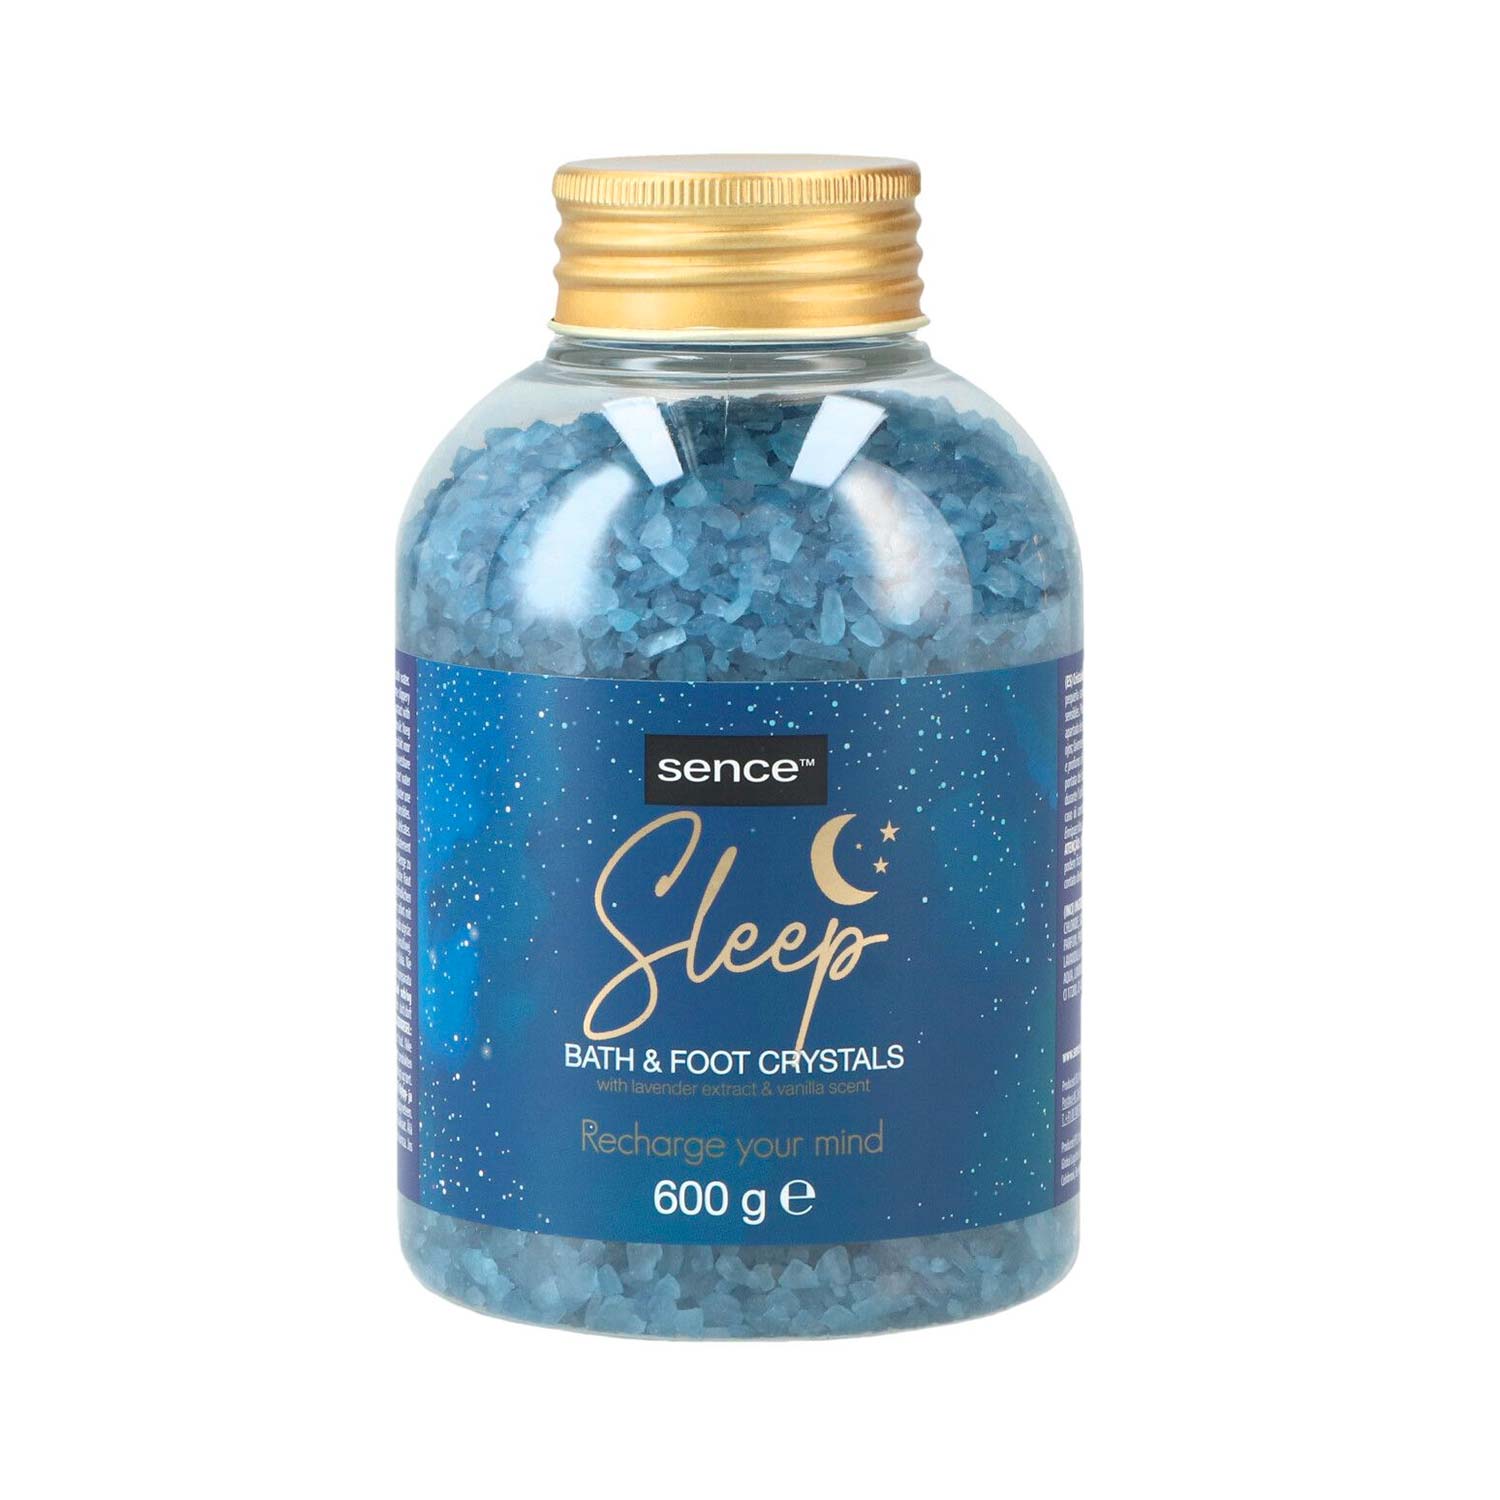 Badesalz "Sleep" mit Lavendel-Extrakt 600 g